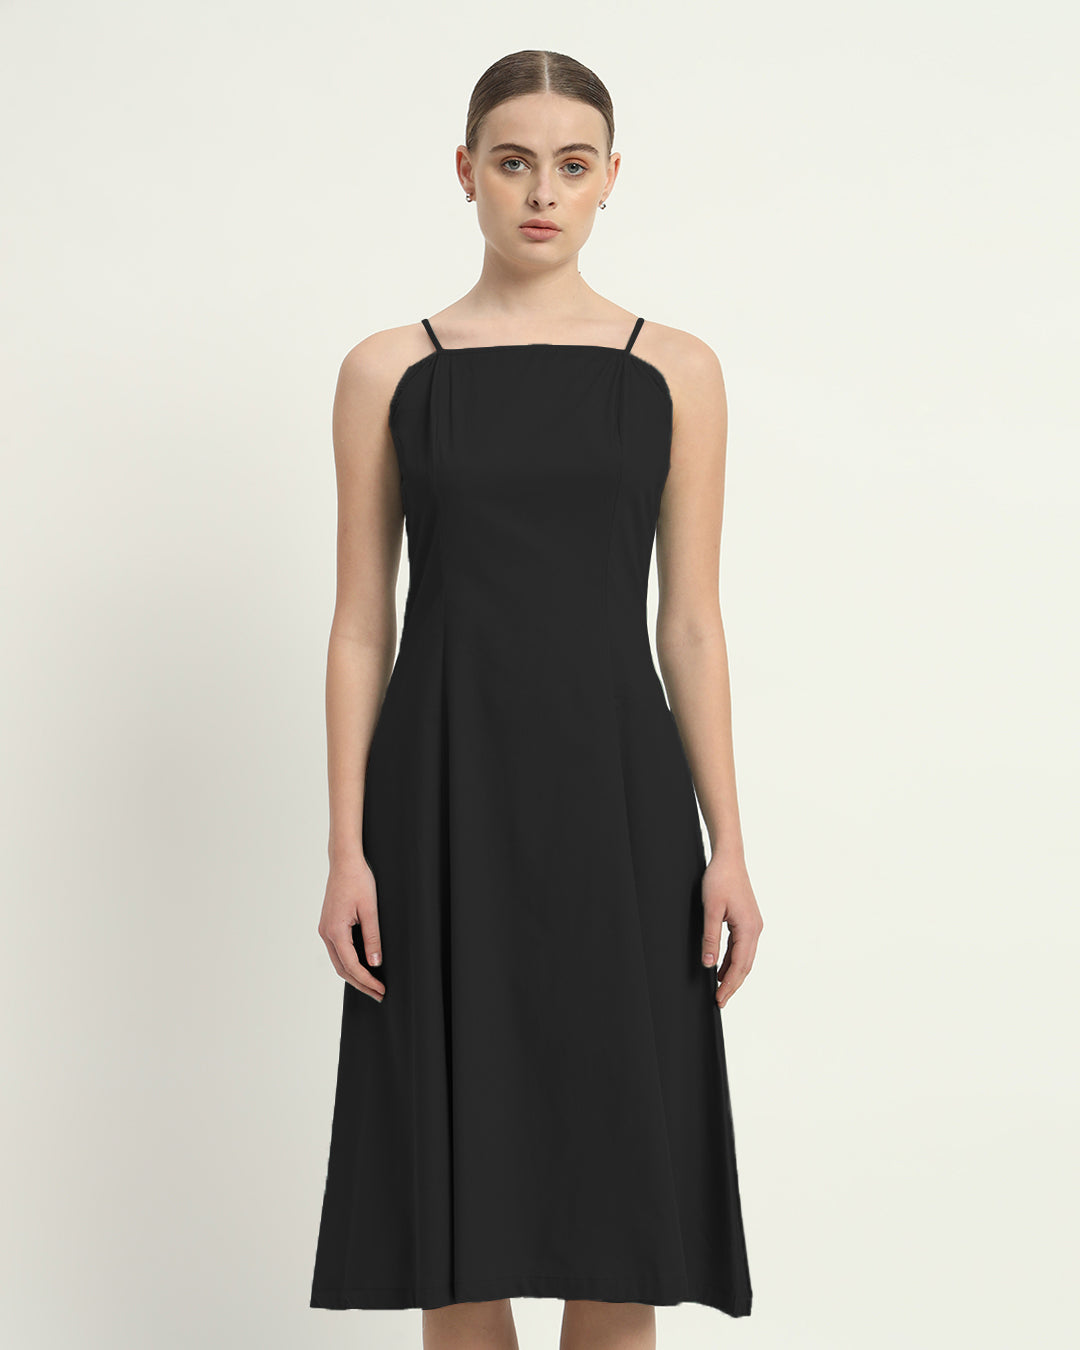 The Valatie Noir Cotton Dress